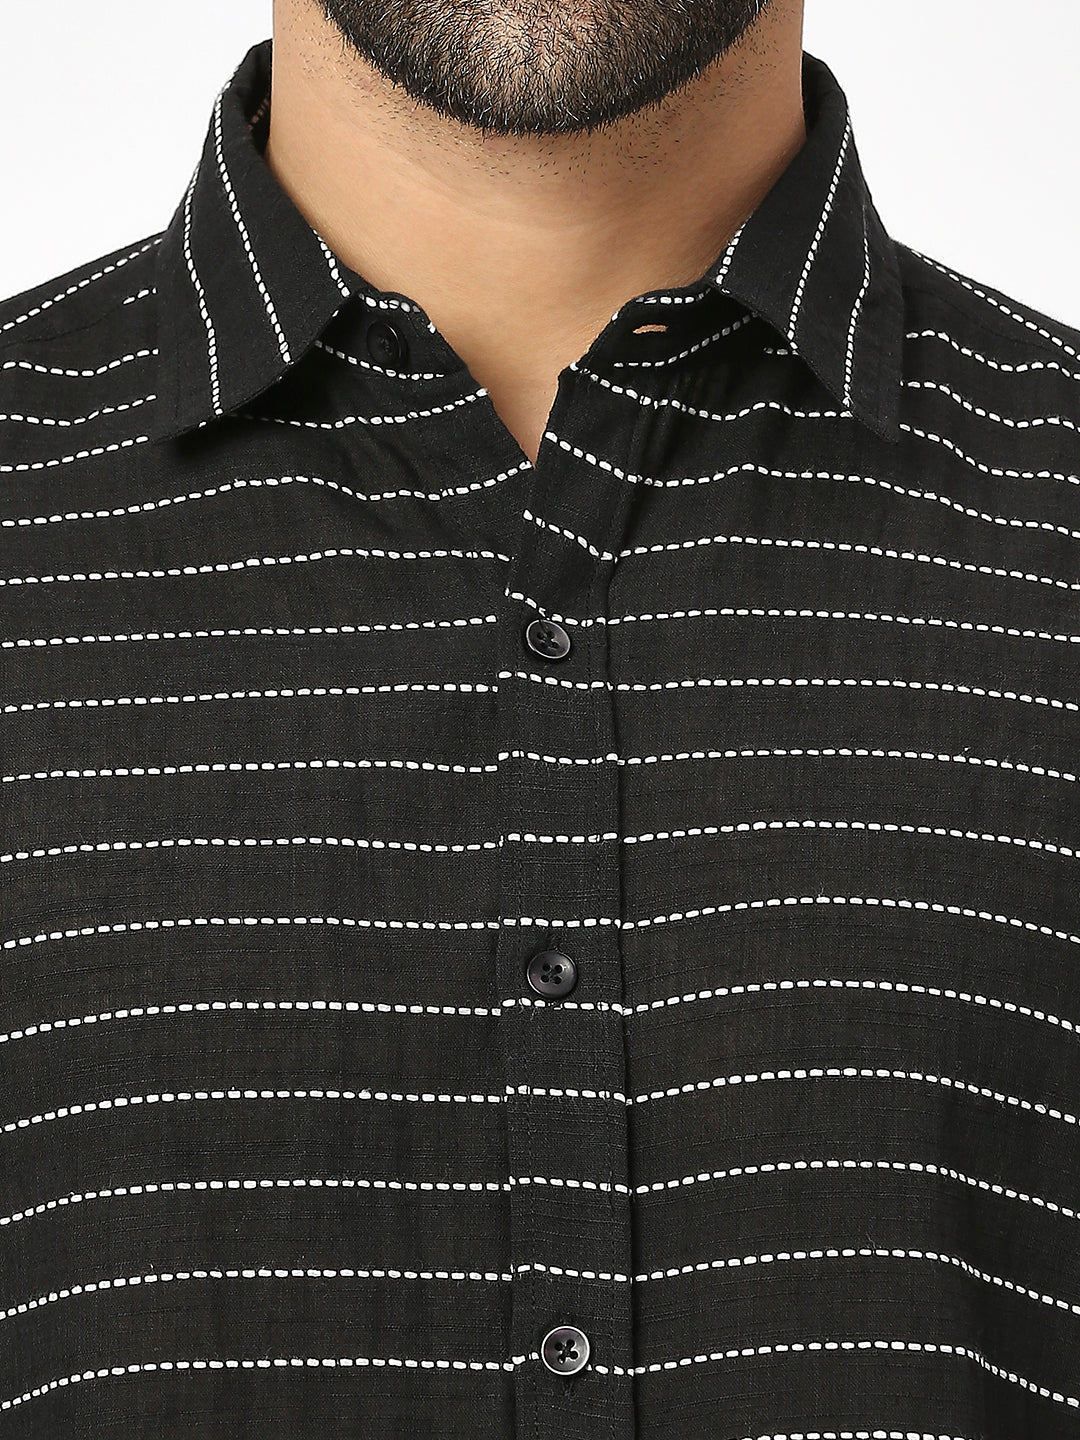 BLAMBLACK Men's Embroidered Half Sleeves Regular fit Spread Collar Shirt